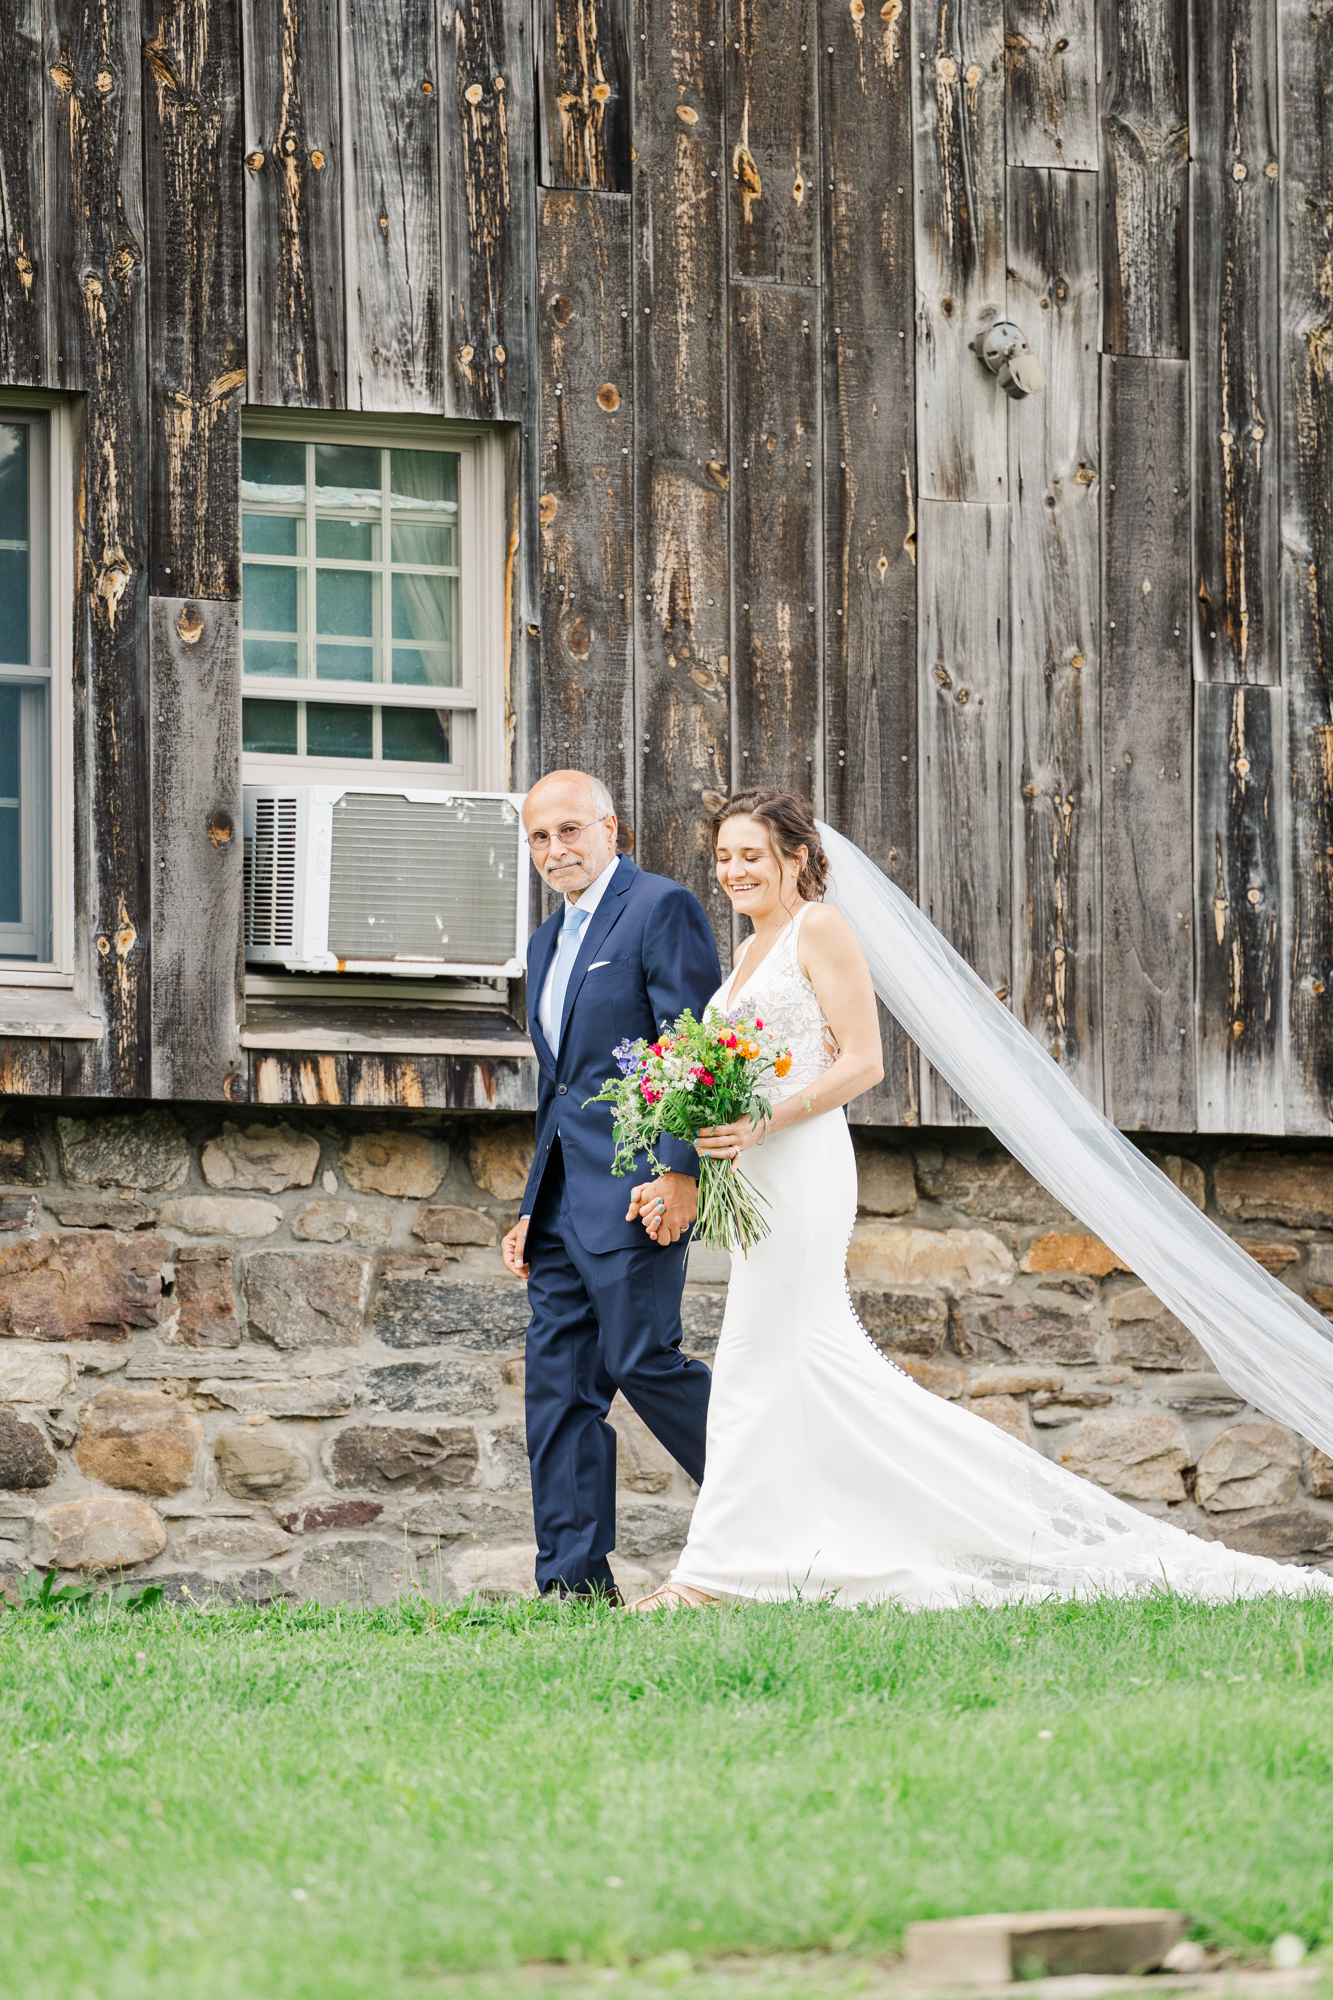 Incredible Upstate Wedding Photos at Cristman Barn in Ilion, New York